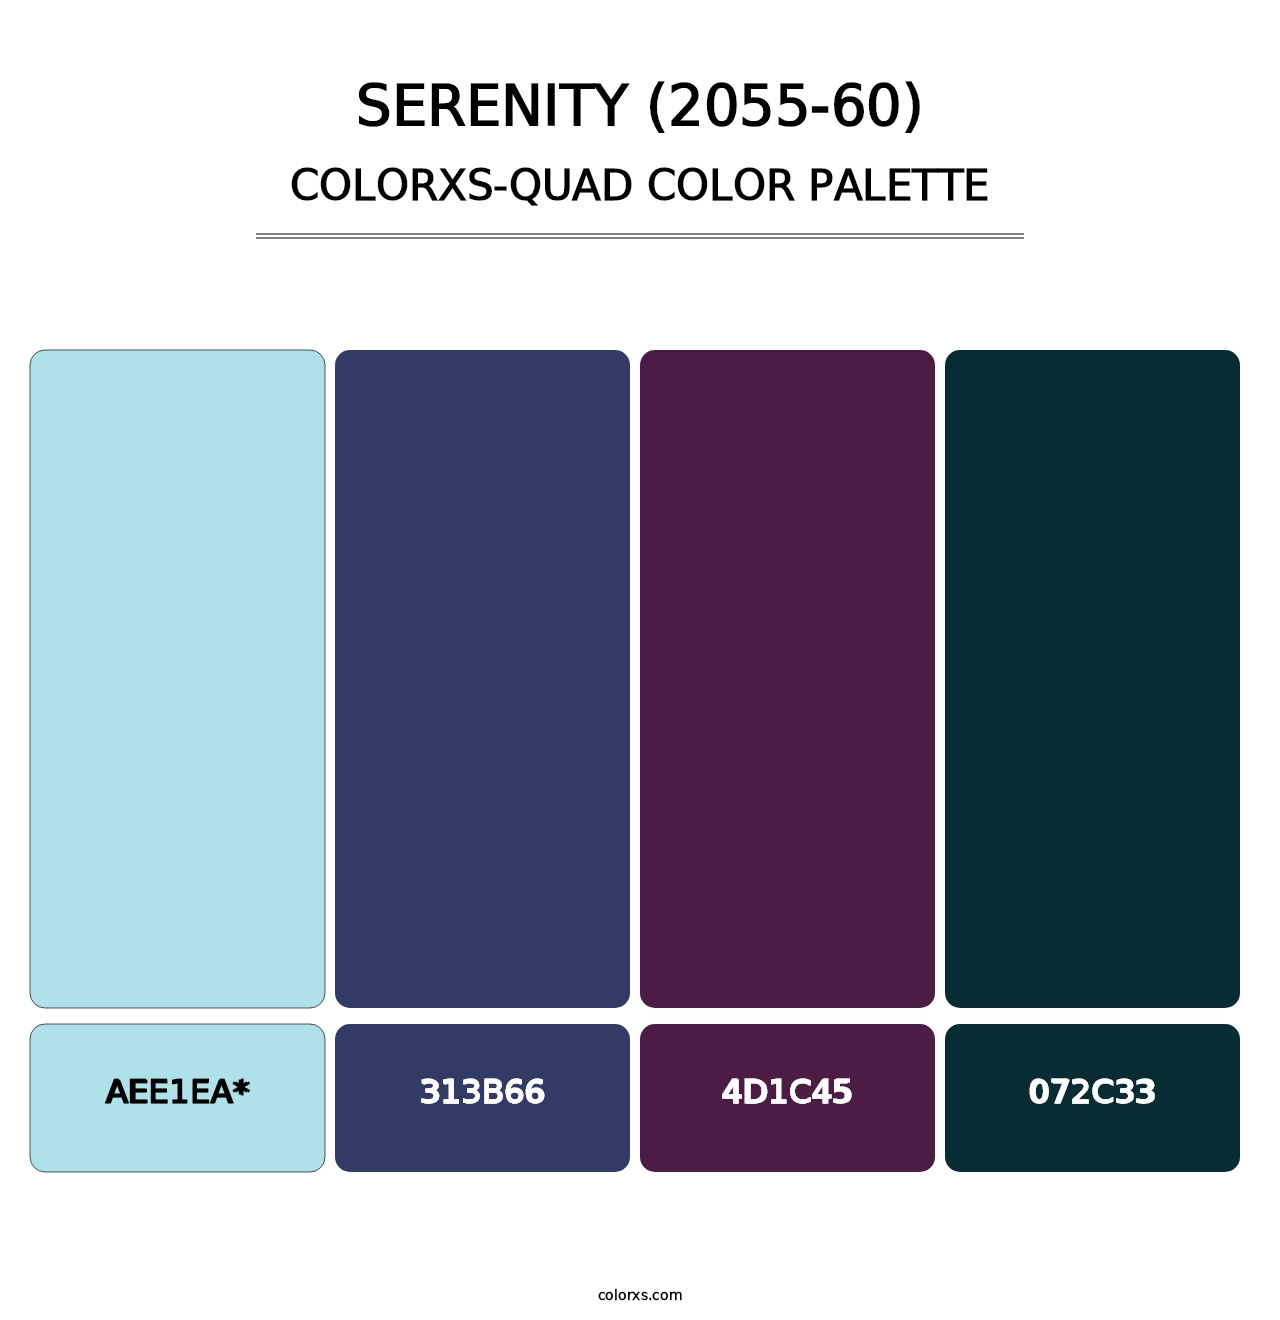 Serenity (2055-60) - Colorxs Quad Palette